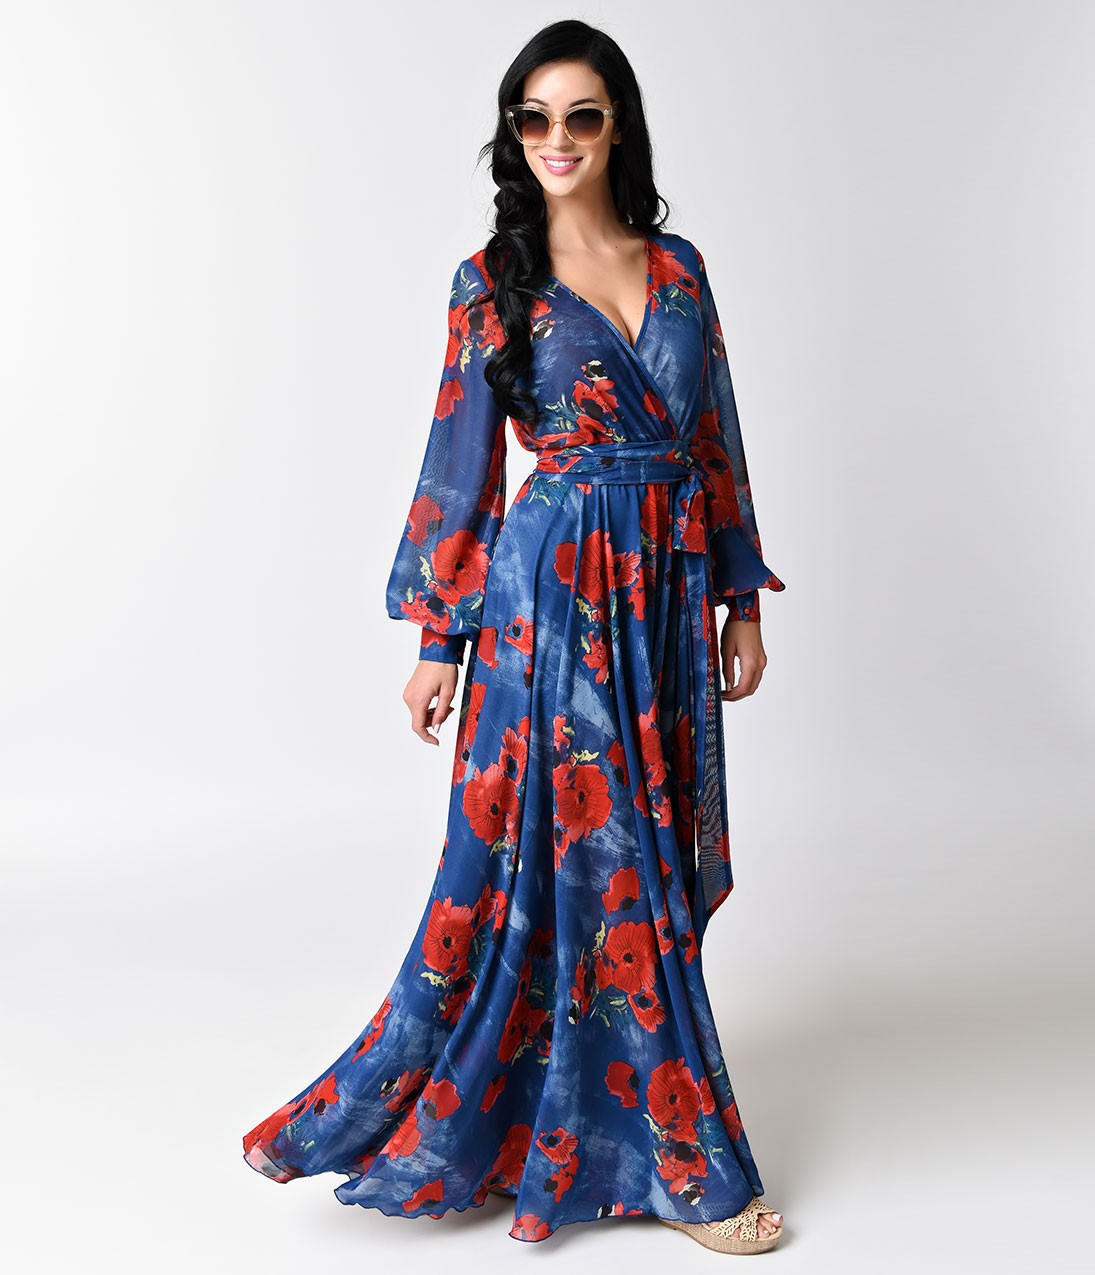 70s Dresses - Disco Dress, Hippie Dress ...